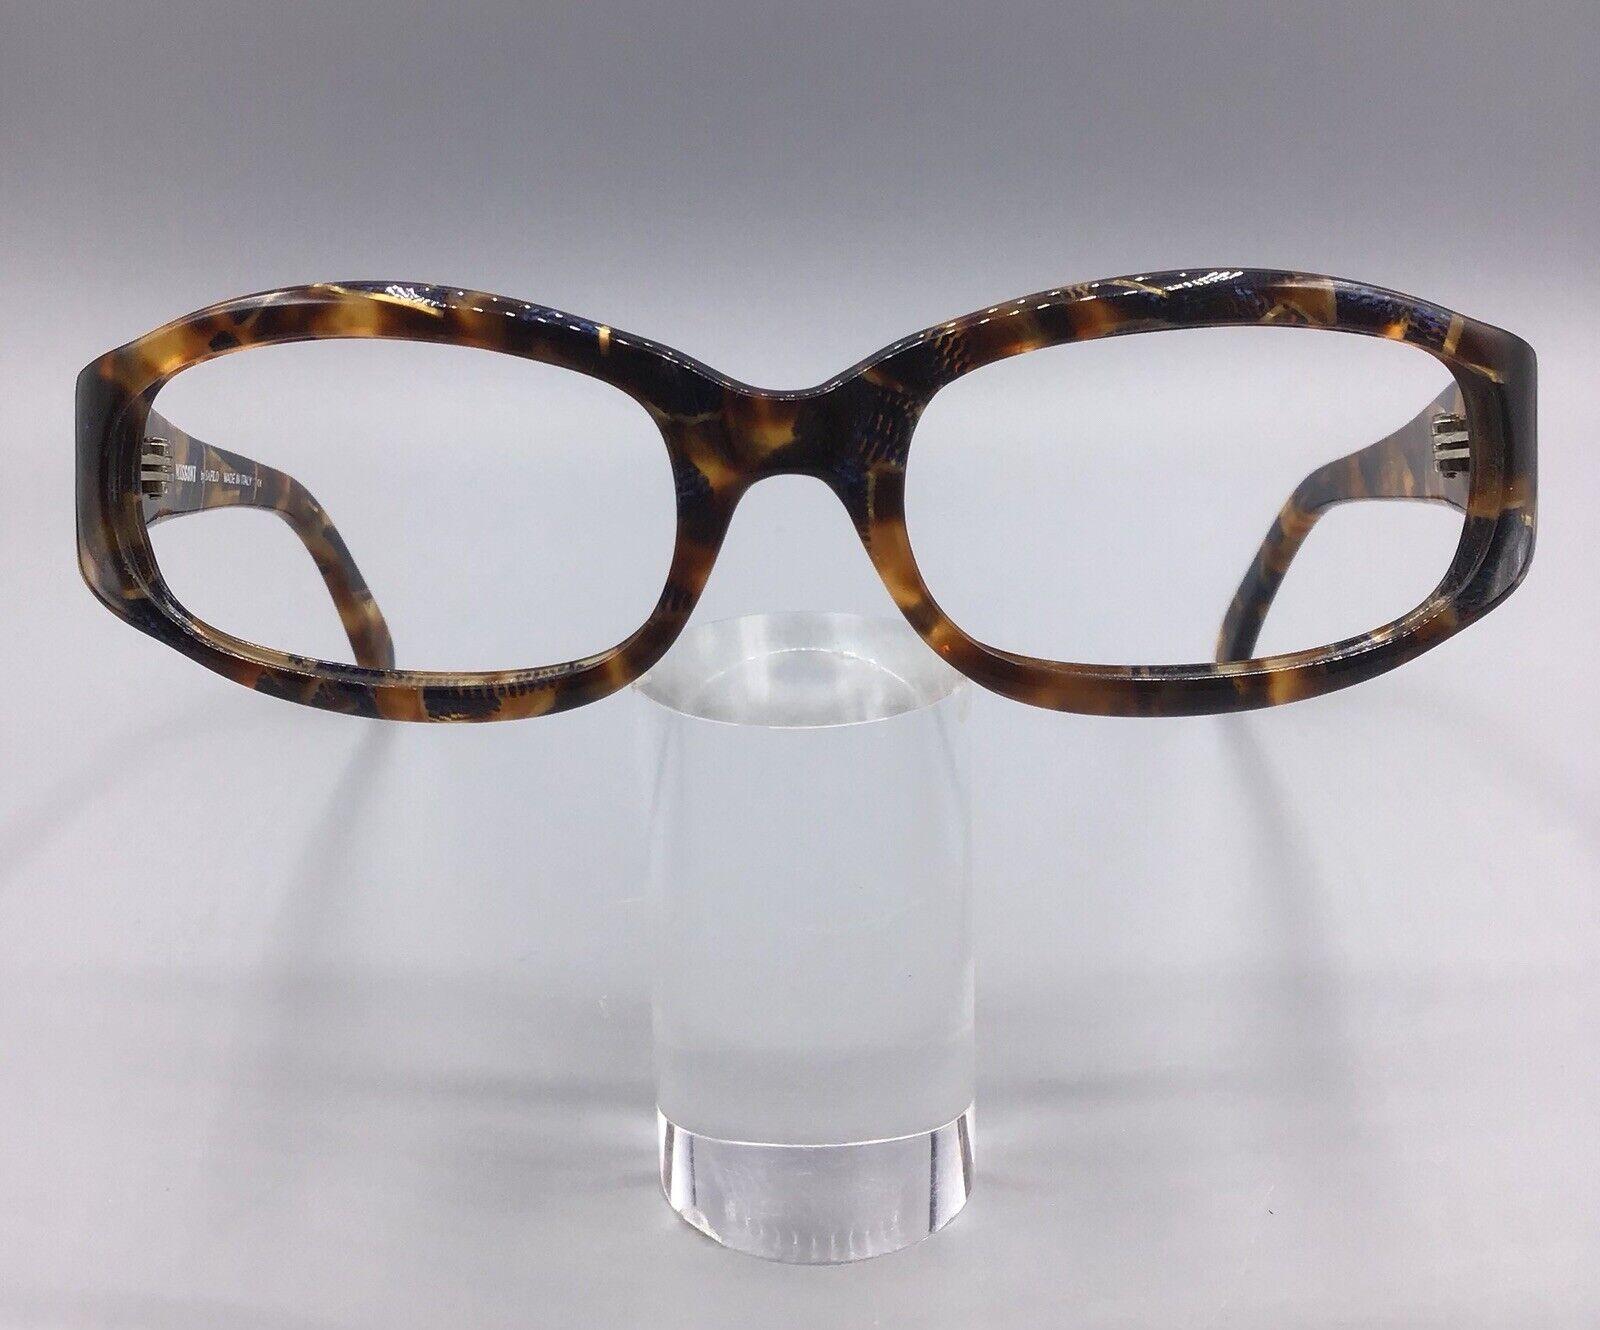 Missoni Occhiale Eyewear Vintage Made in Italy Eyeglasses Brillen Lunettes